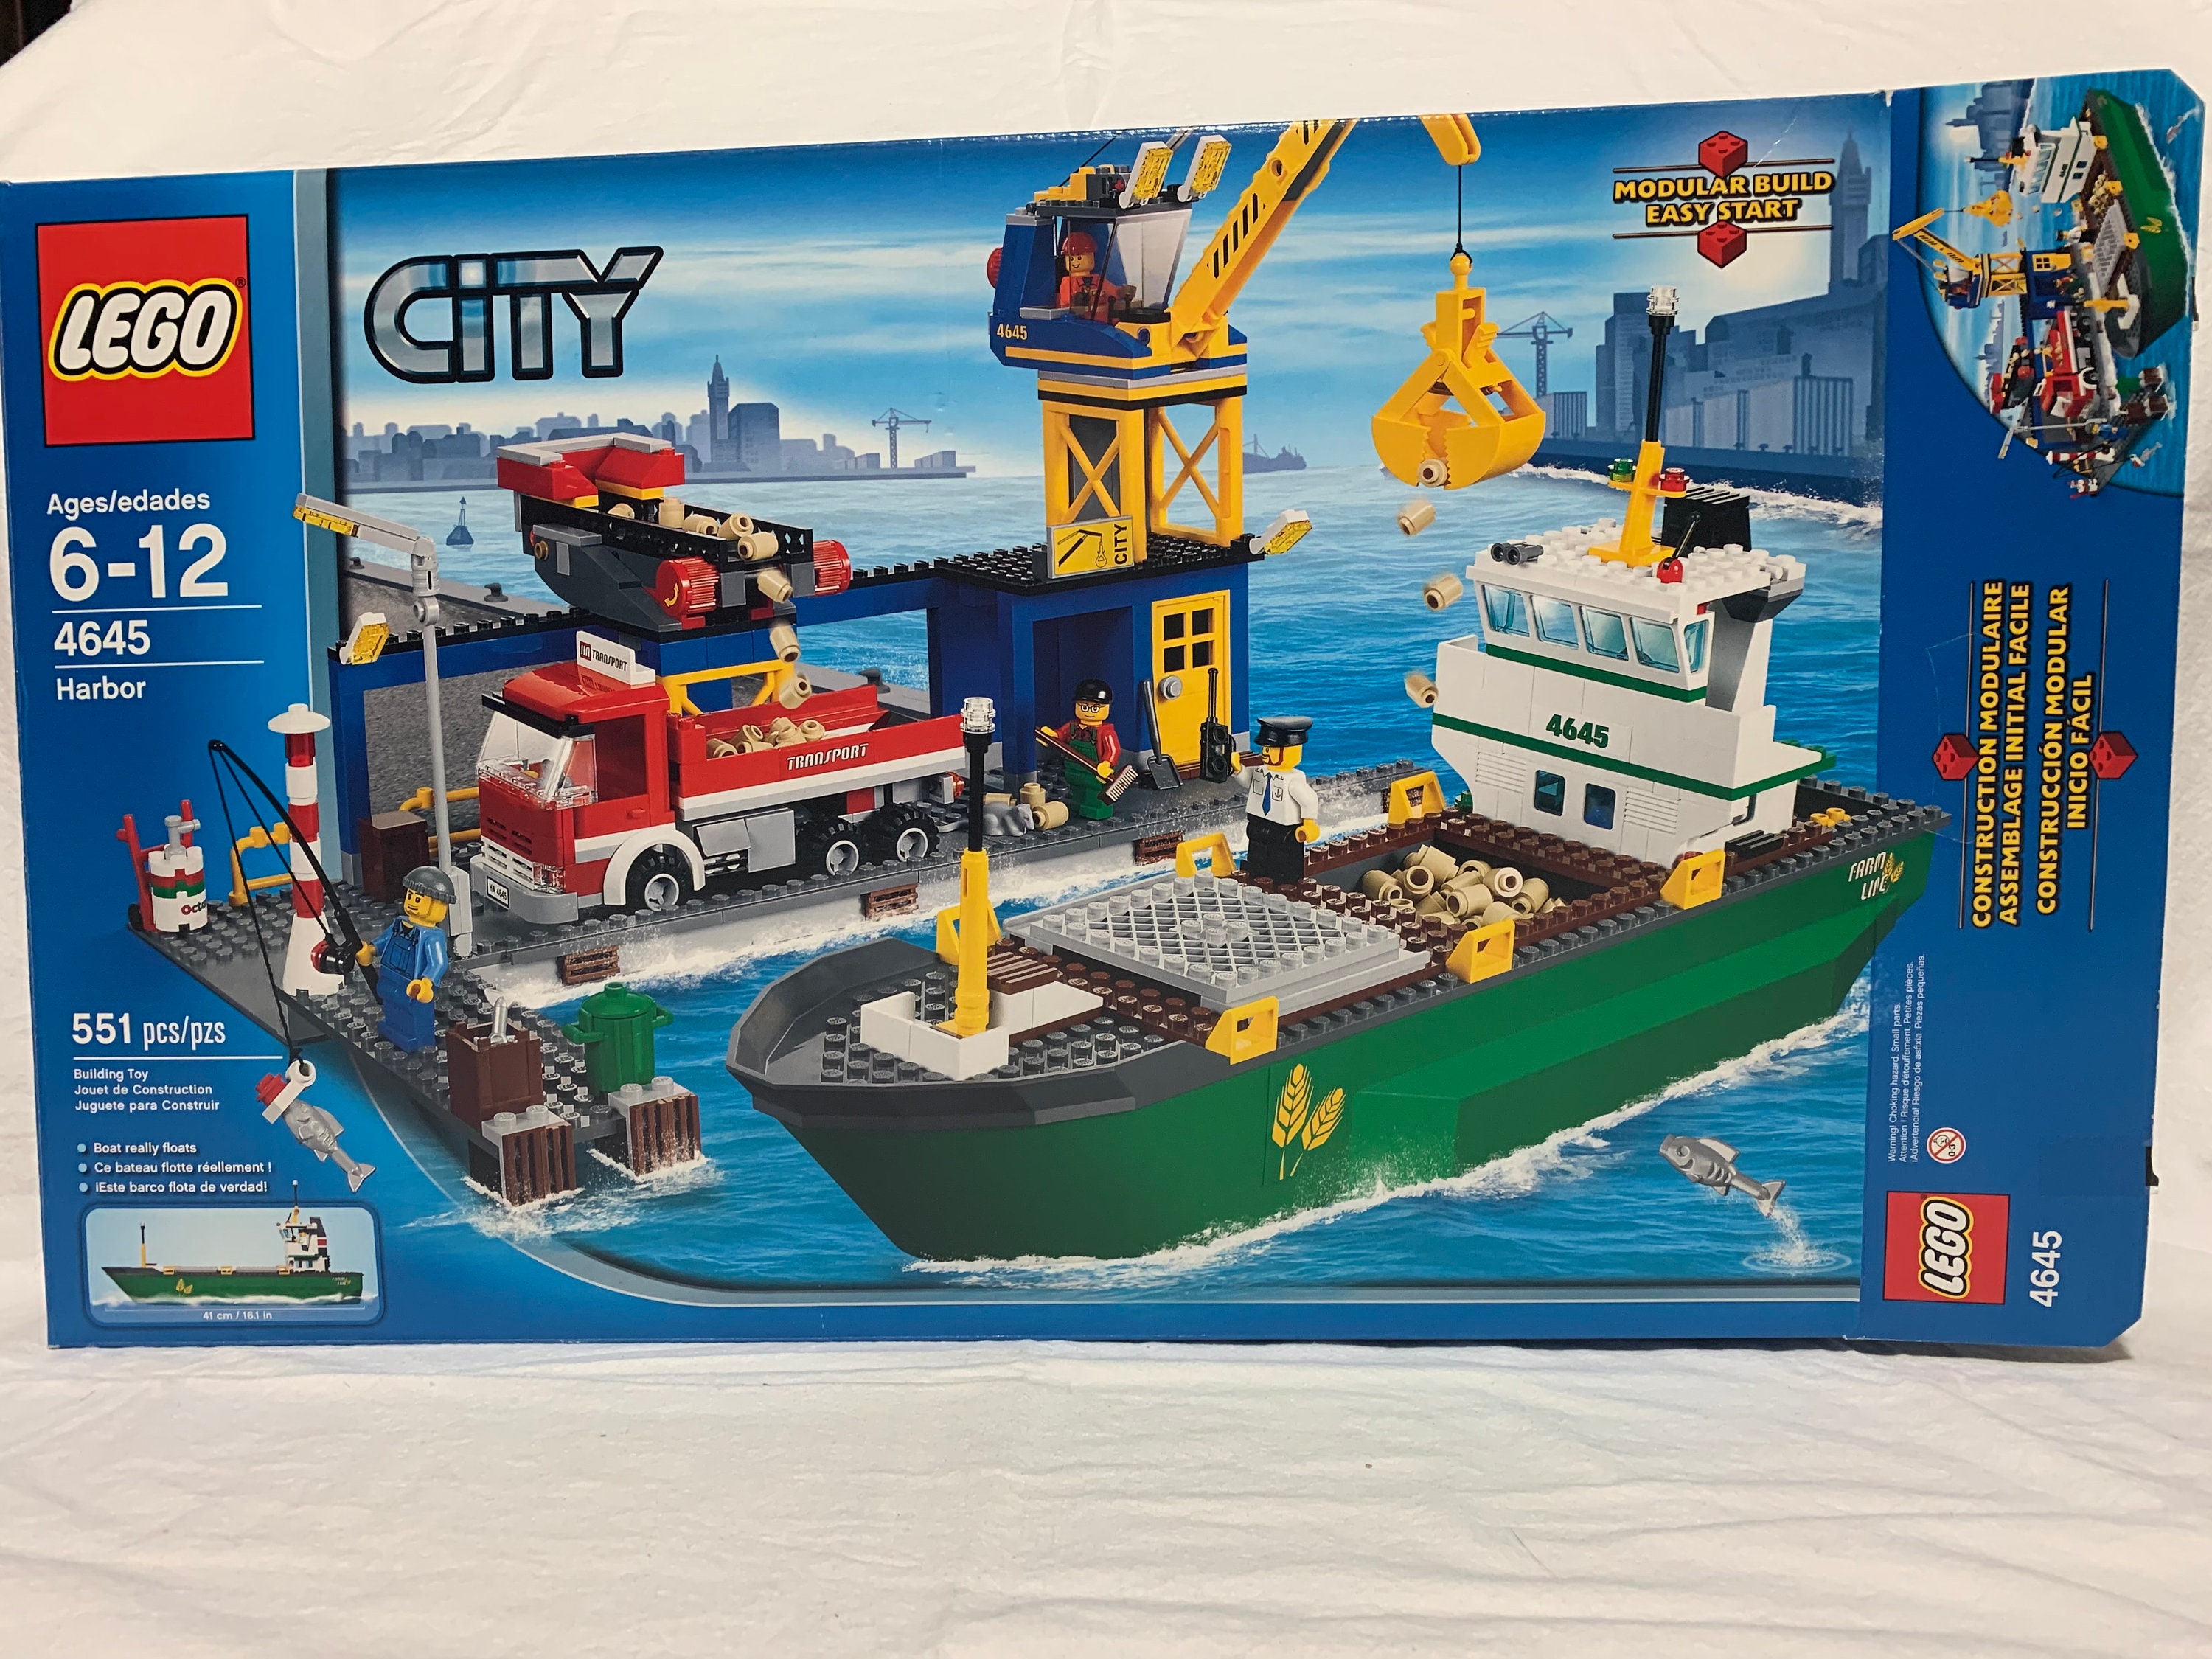 LEGO CITY MINIFIGURES X10 Bulk Packs - Affordable + Includes